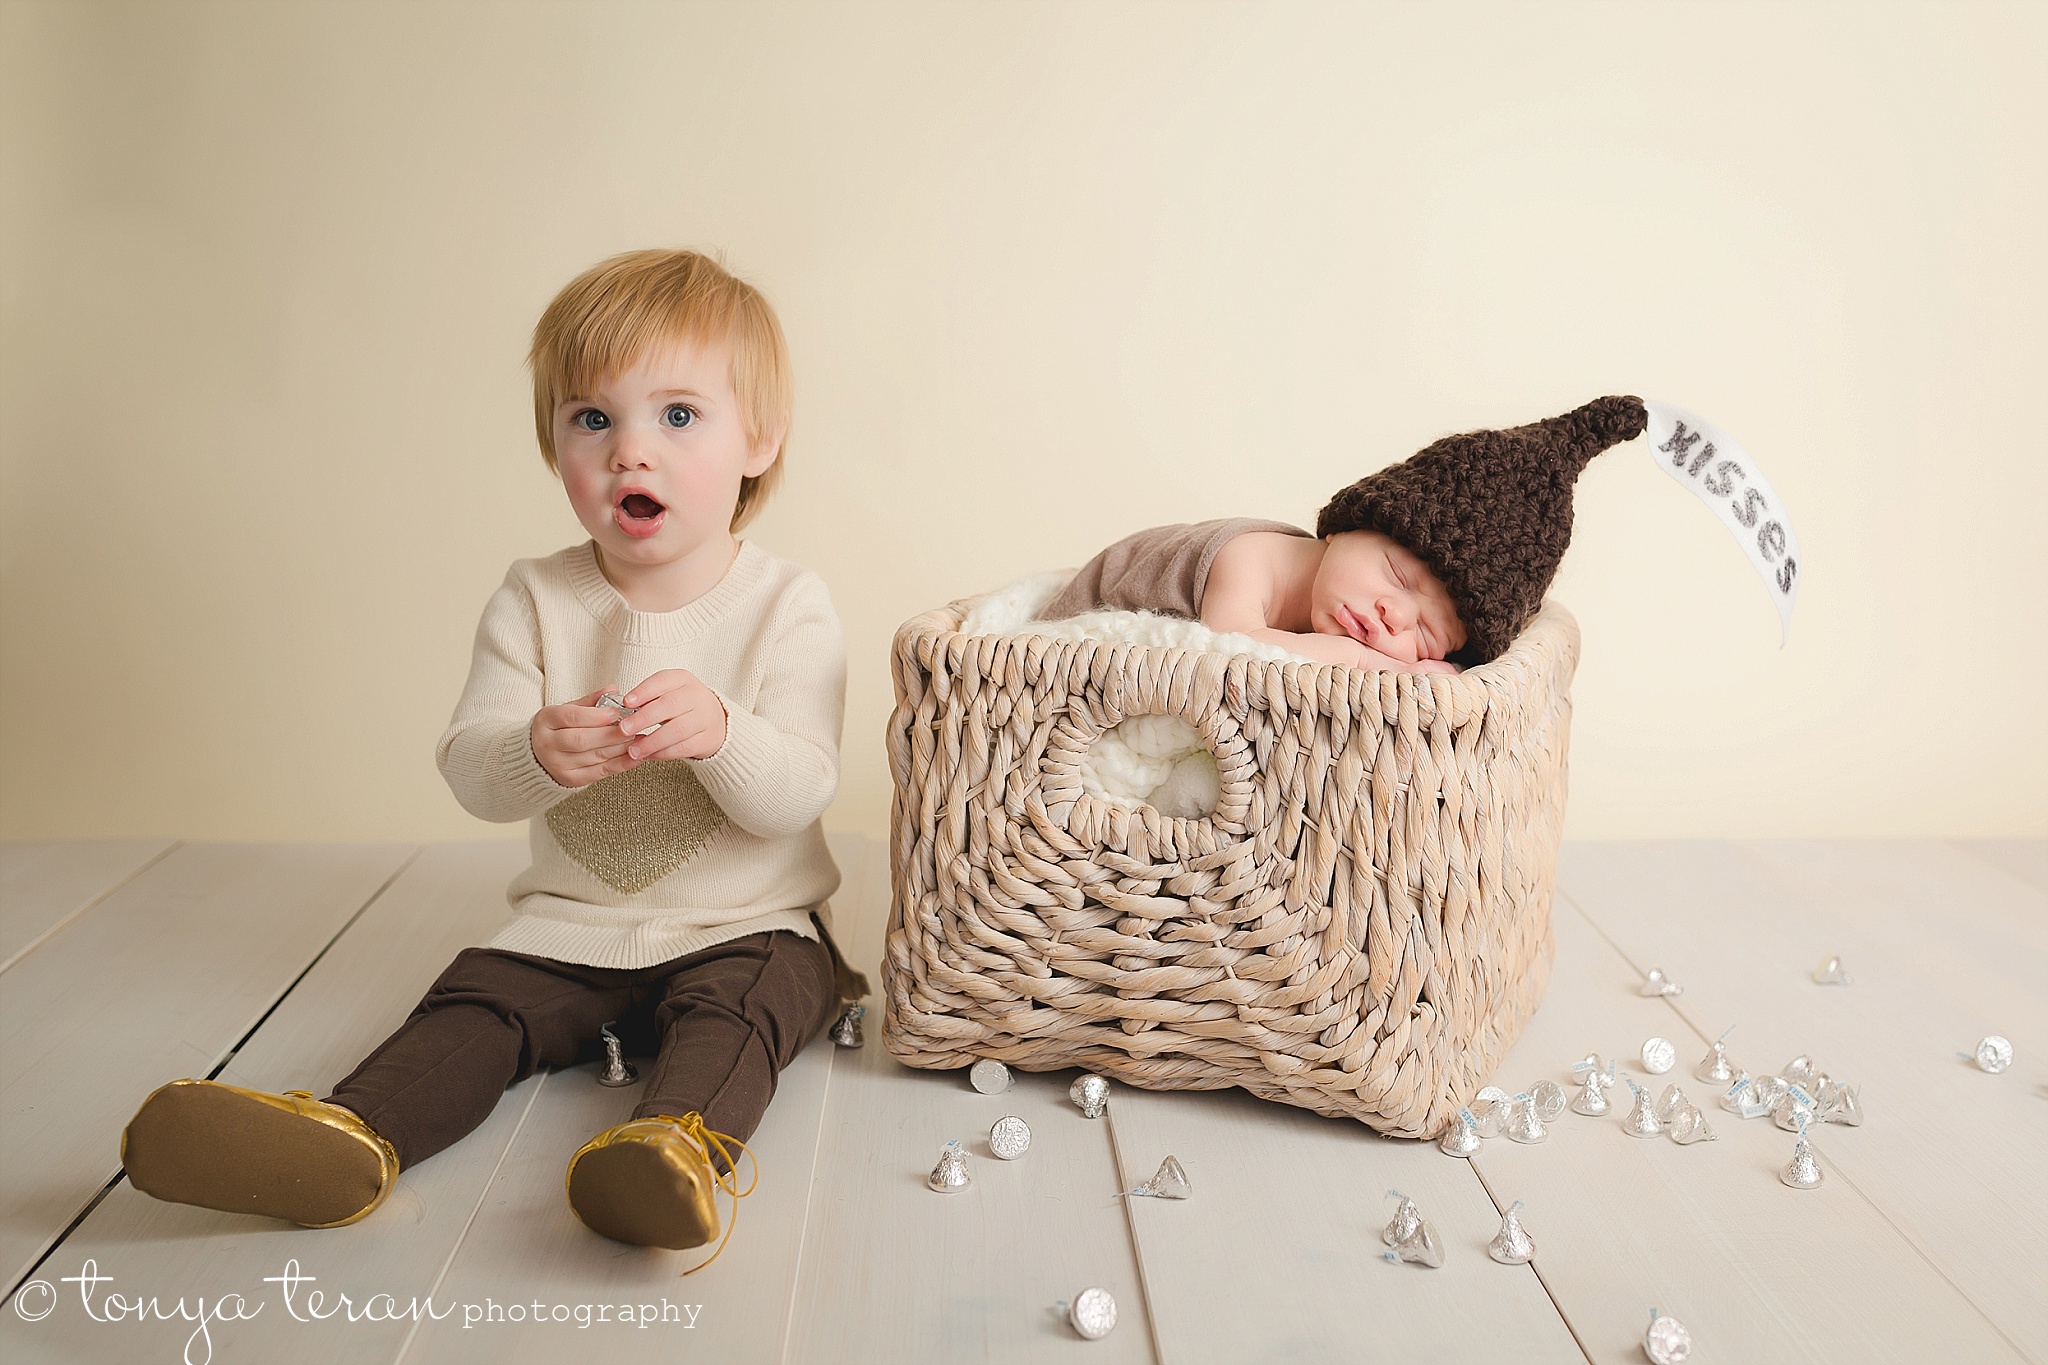 Newborn Valentine's Day Photo Session | Tonya Teran Photography, Washington, DC Newborn, Baby, and Family Photographer